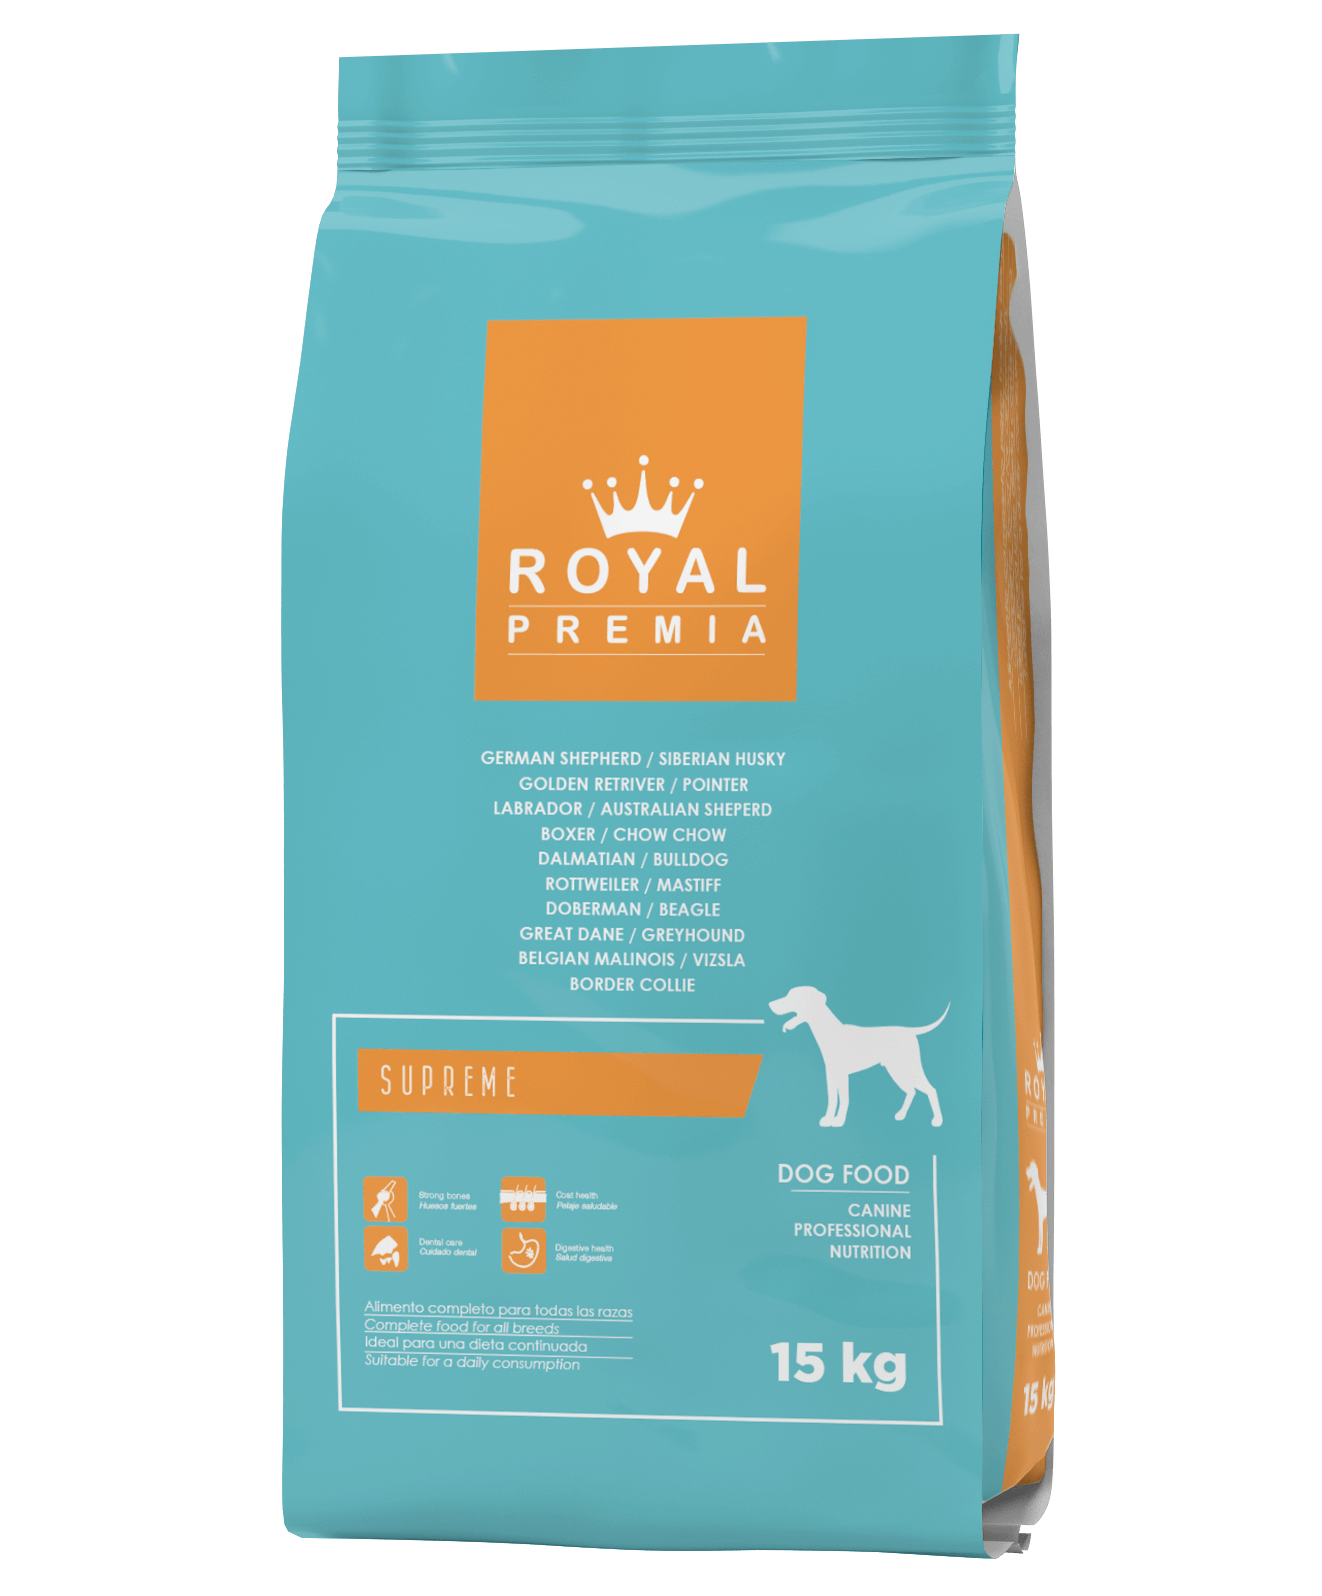 Royal Premia Dry Dog Food and Puppy Food 15kg in Sharjah, Dubai